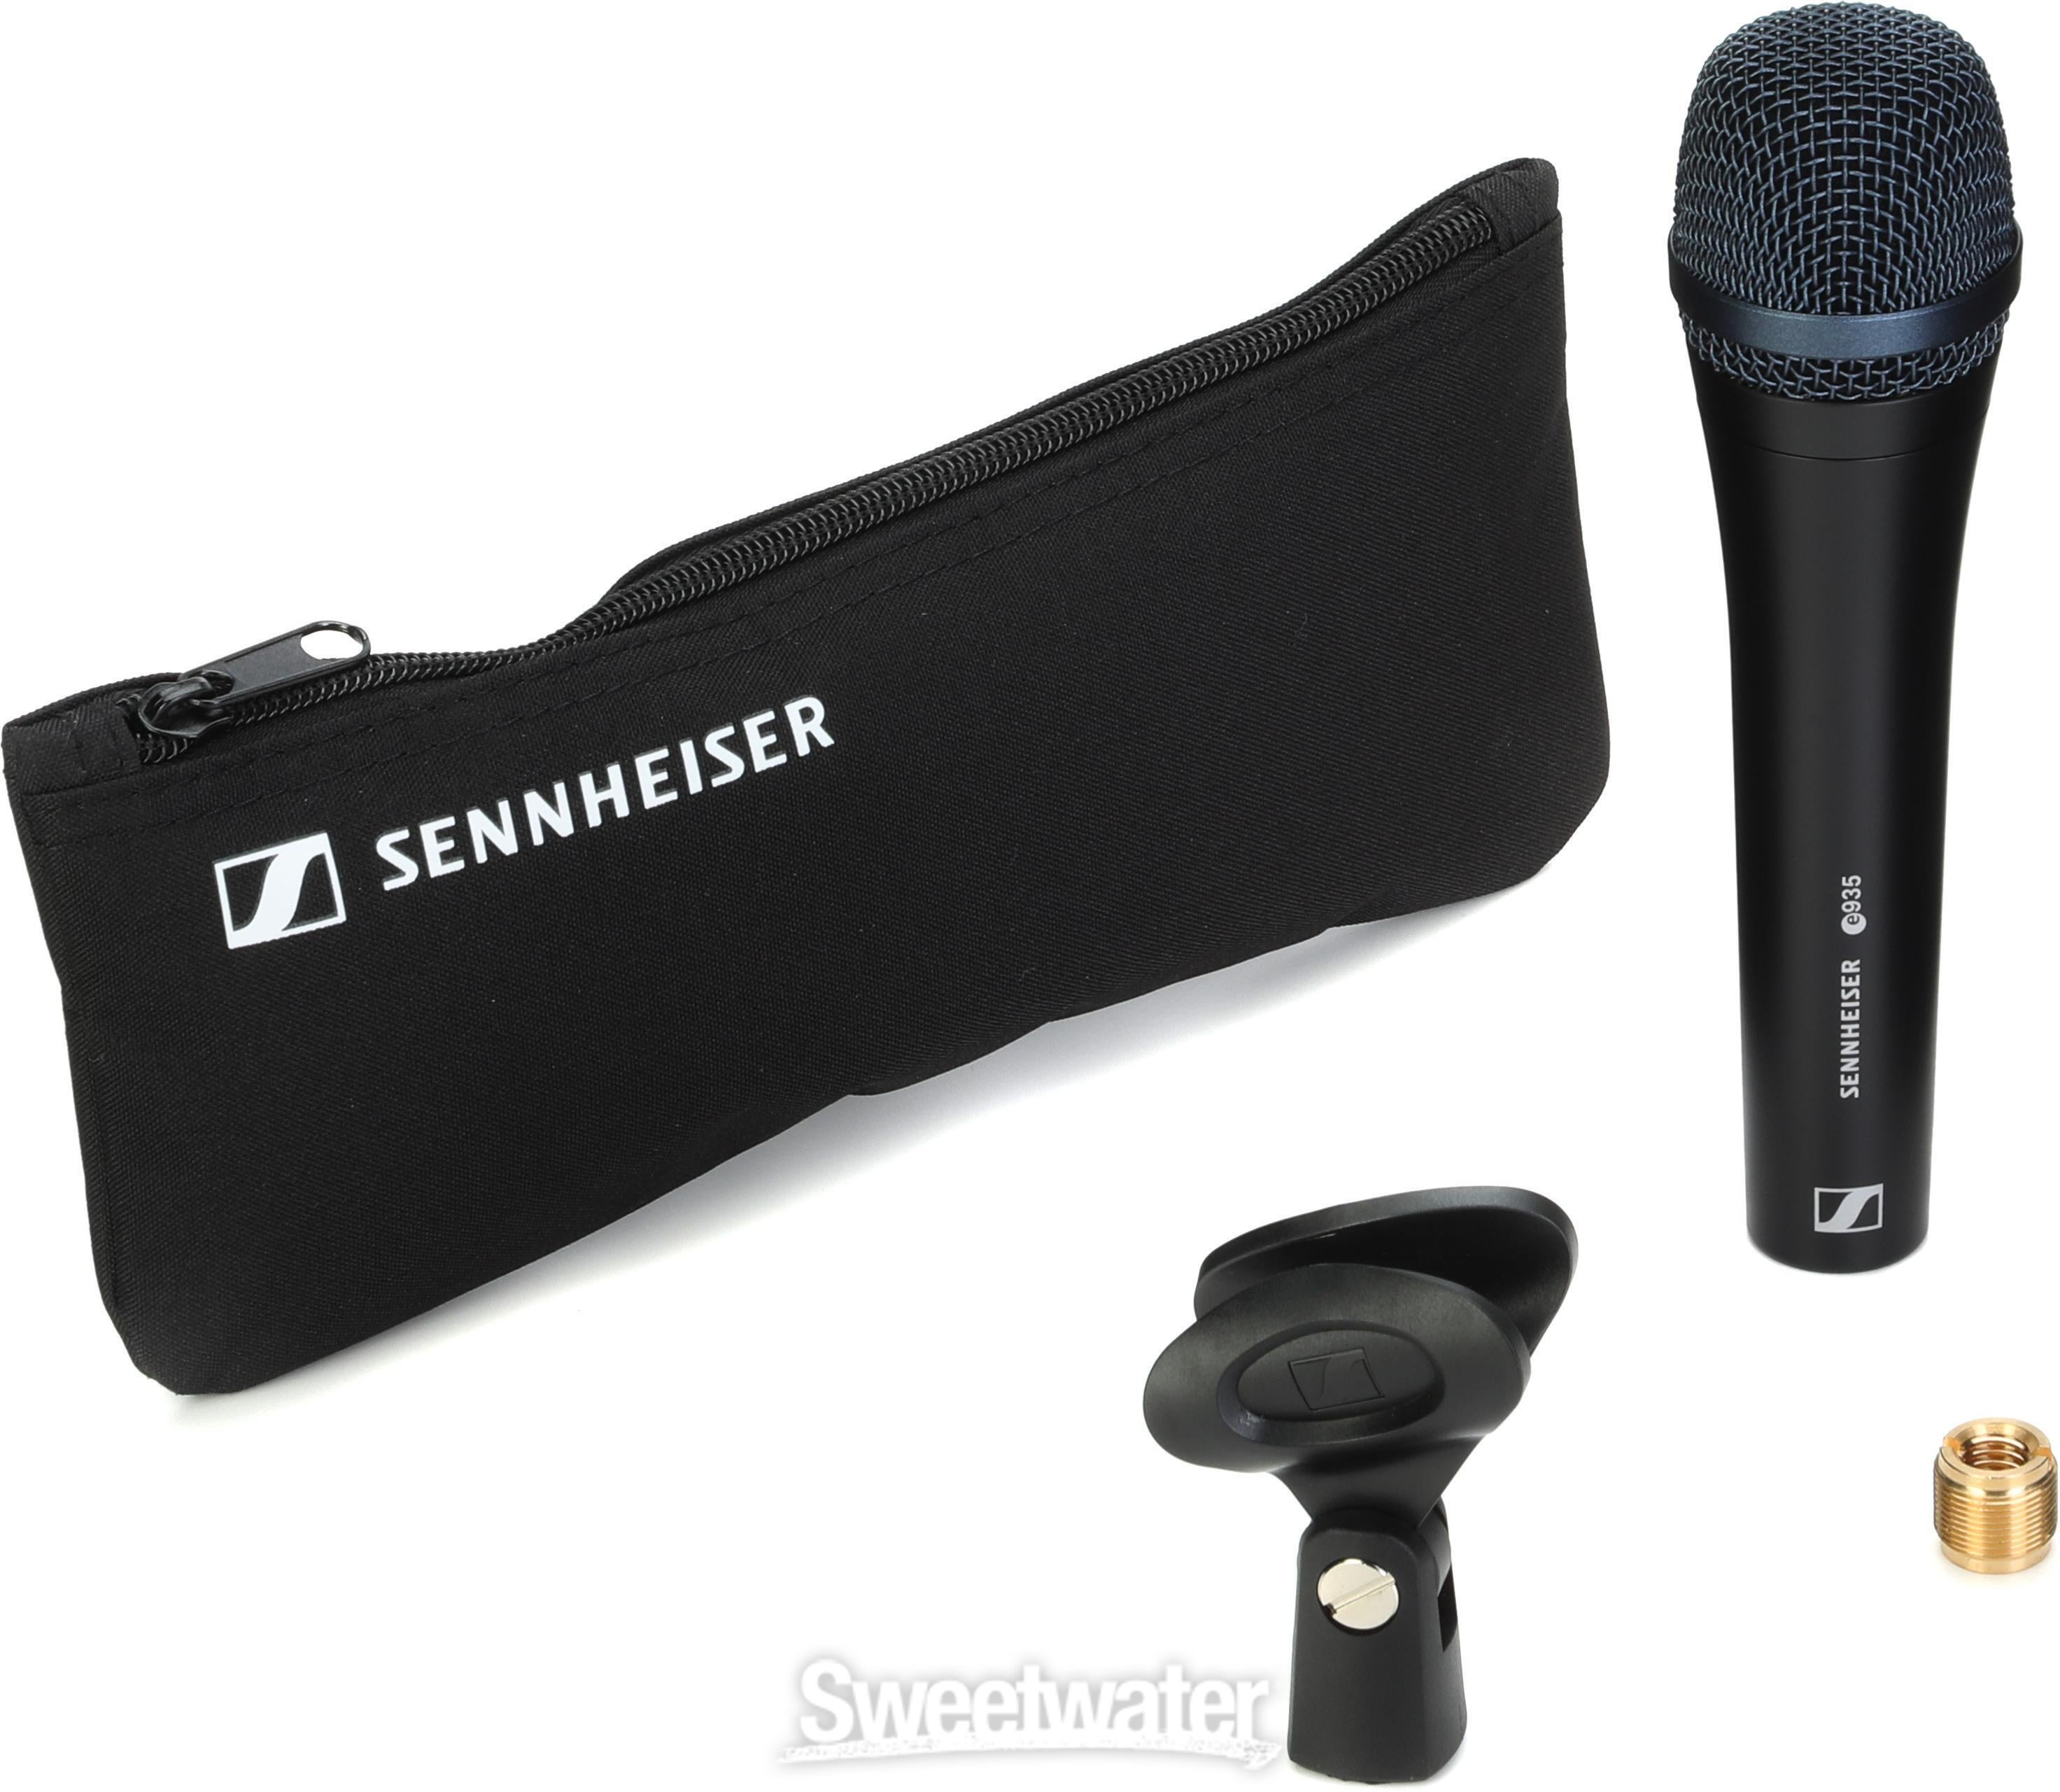 Sennheiser e 935 Cardioid Dynamic Vocal Microphone | Sweetwater